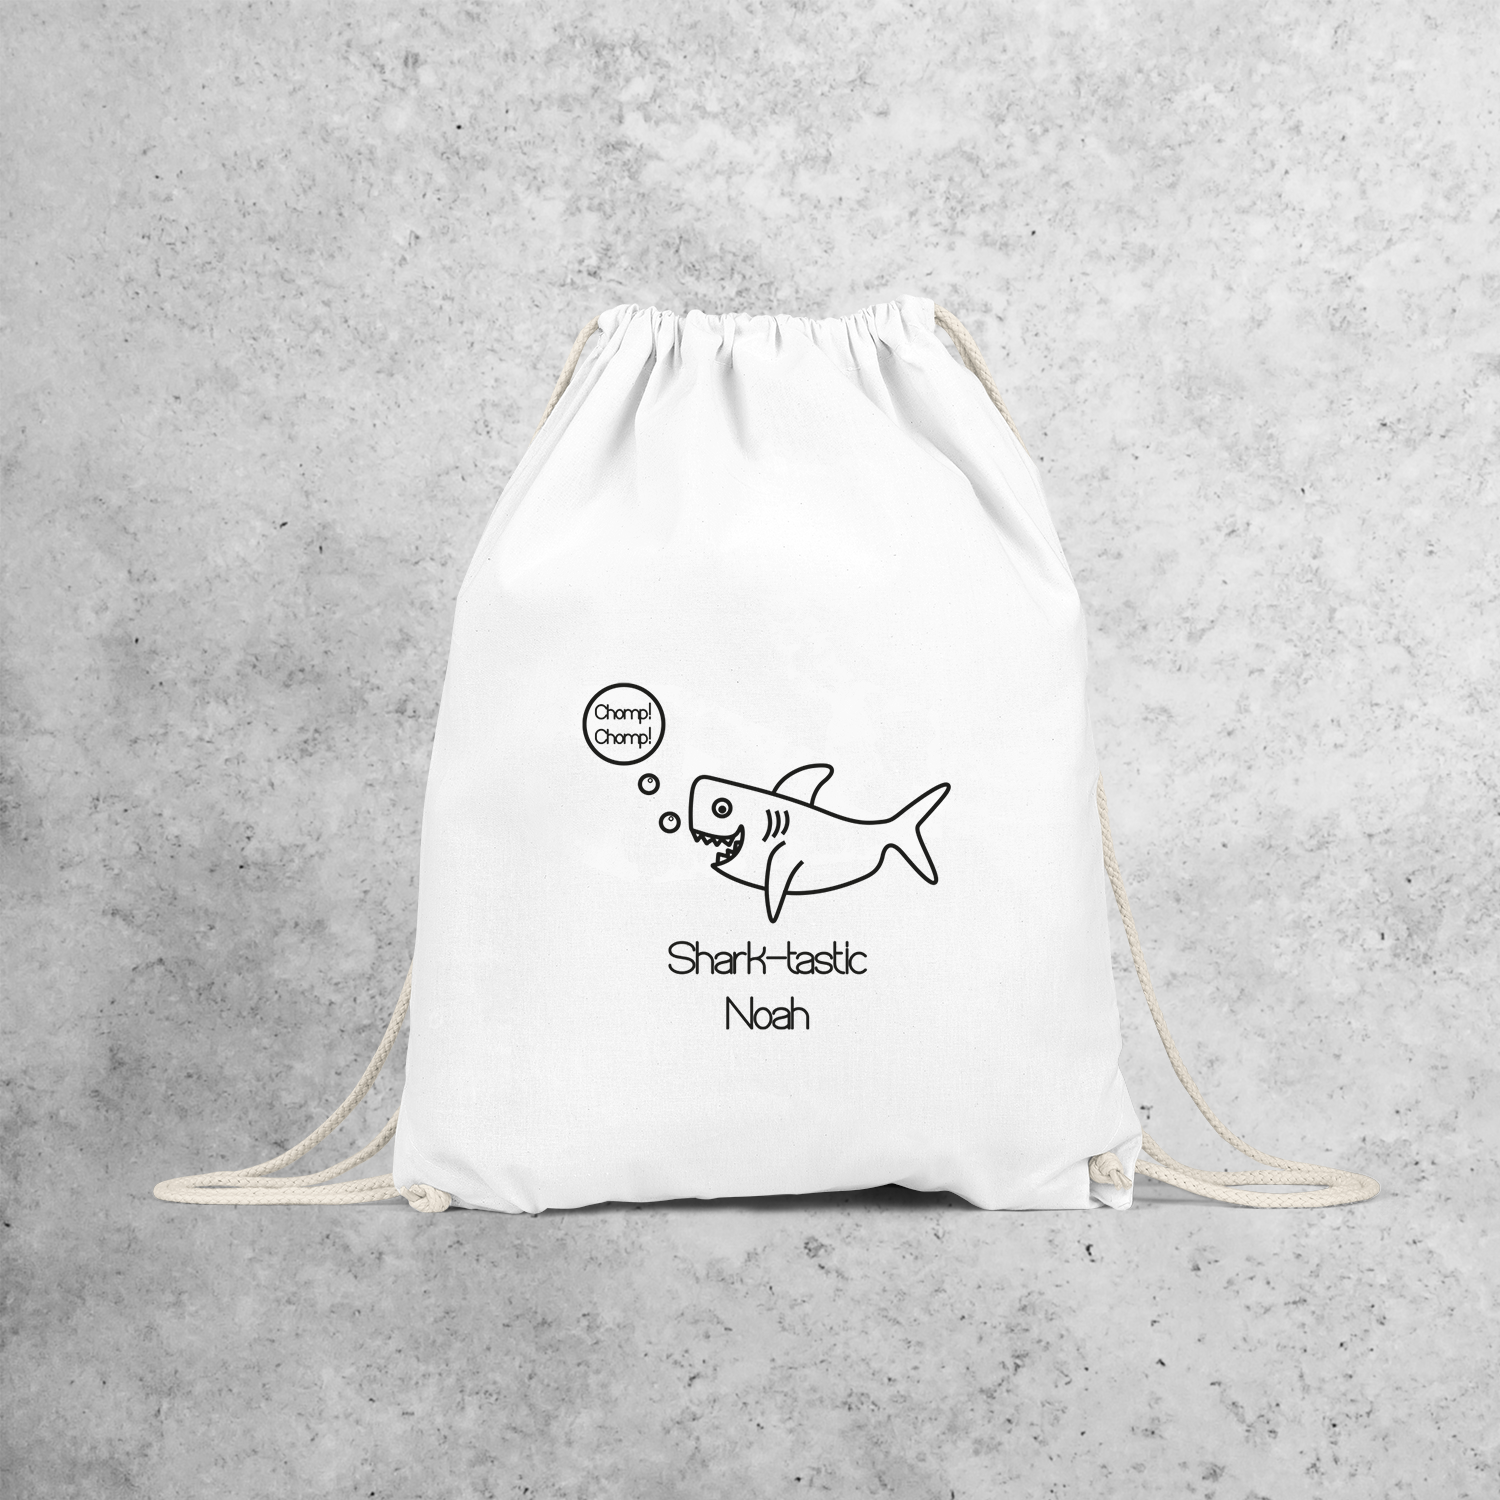 'Sharktastic' backpack